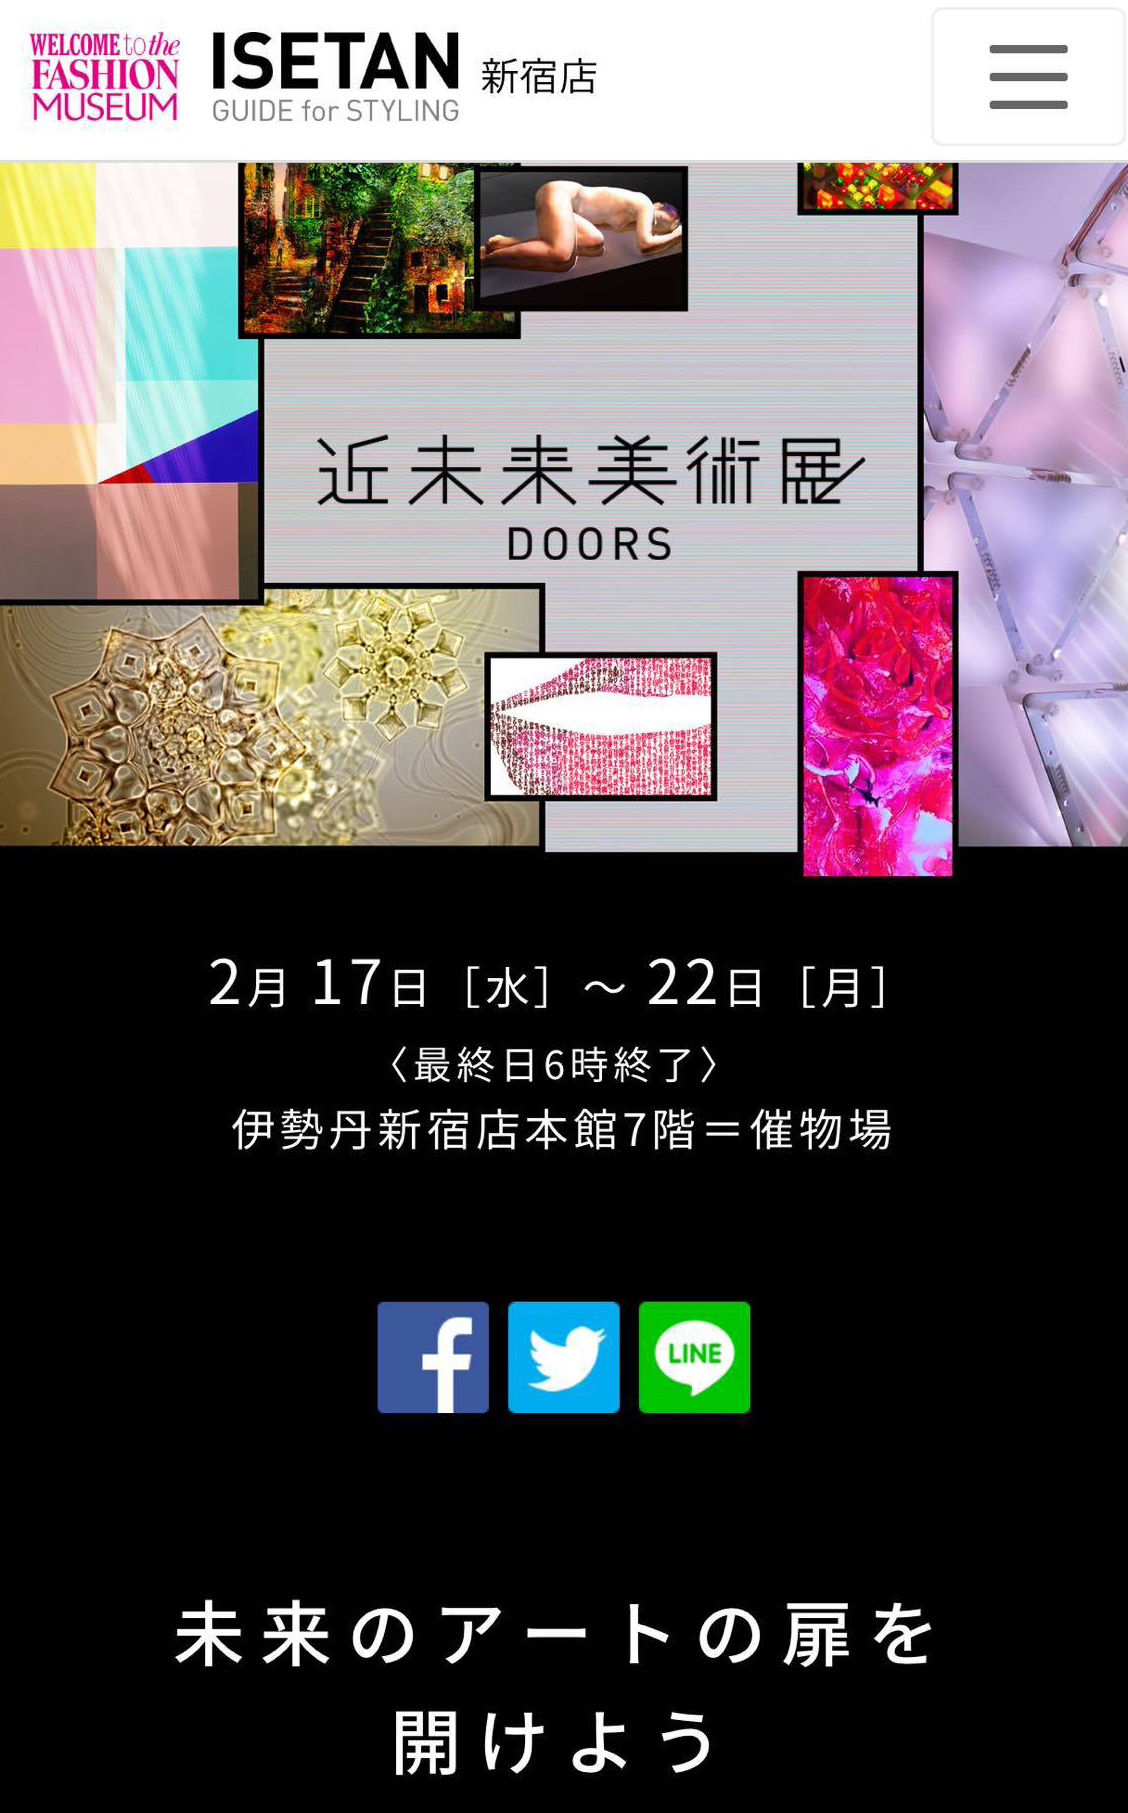 Exhibition Doors, ISETAN, Shinjuku, Tokyo